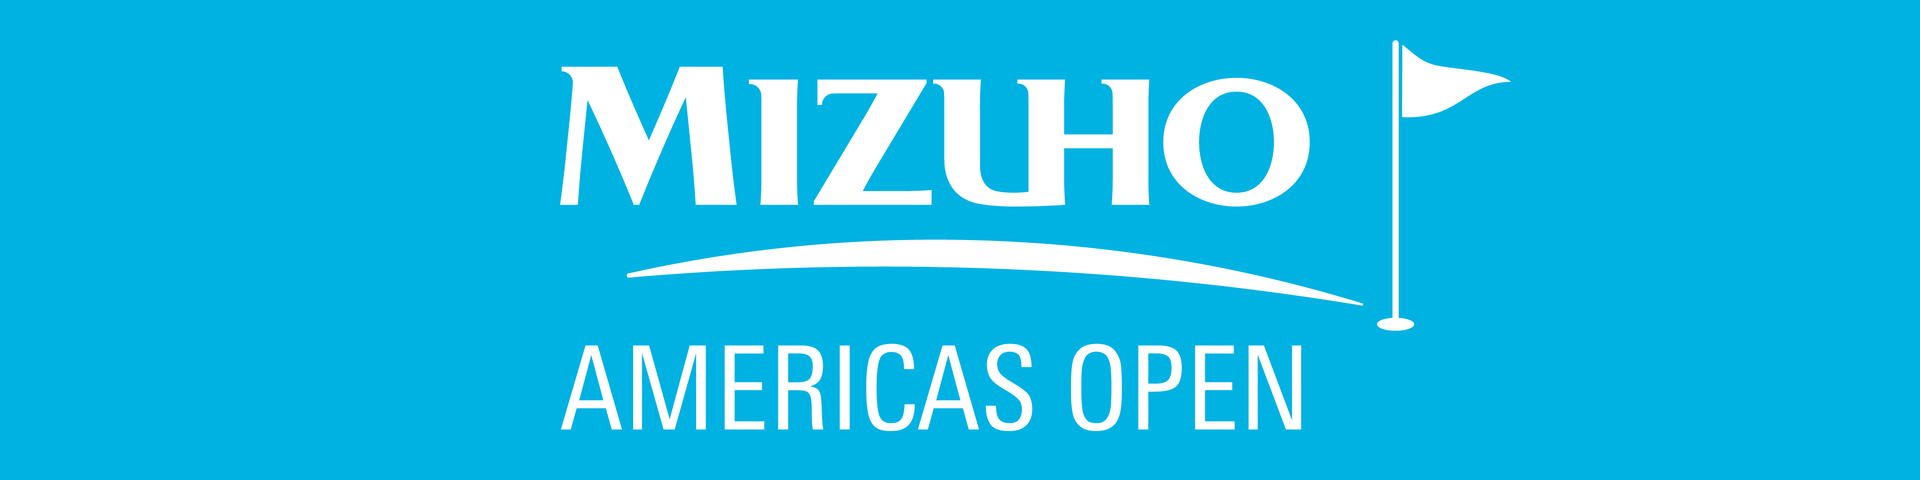 JLab Partners with LPGA Mizuho America's Open